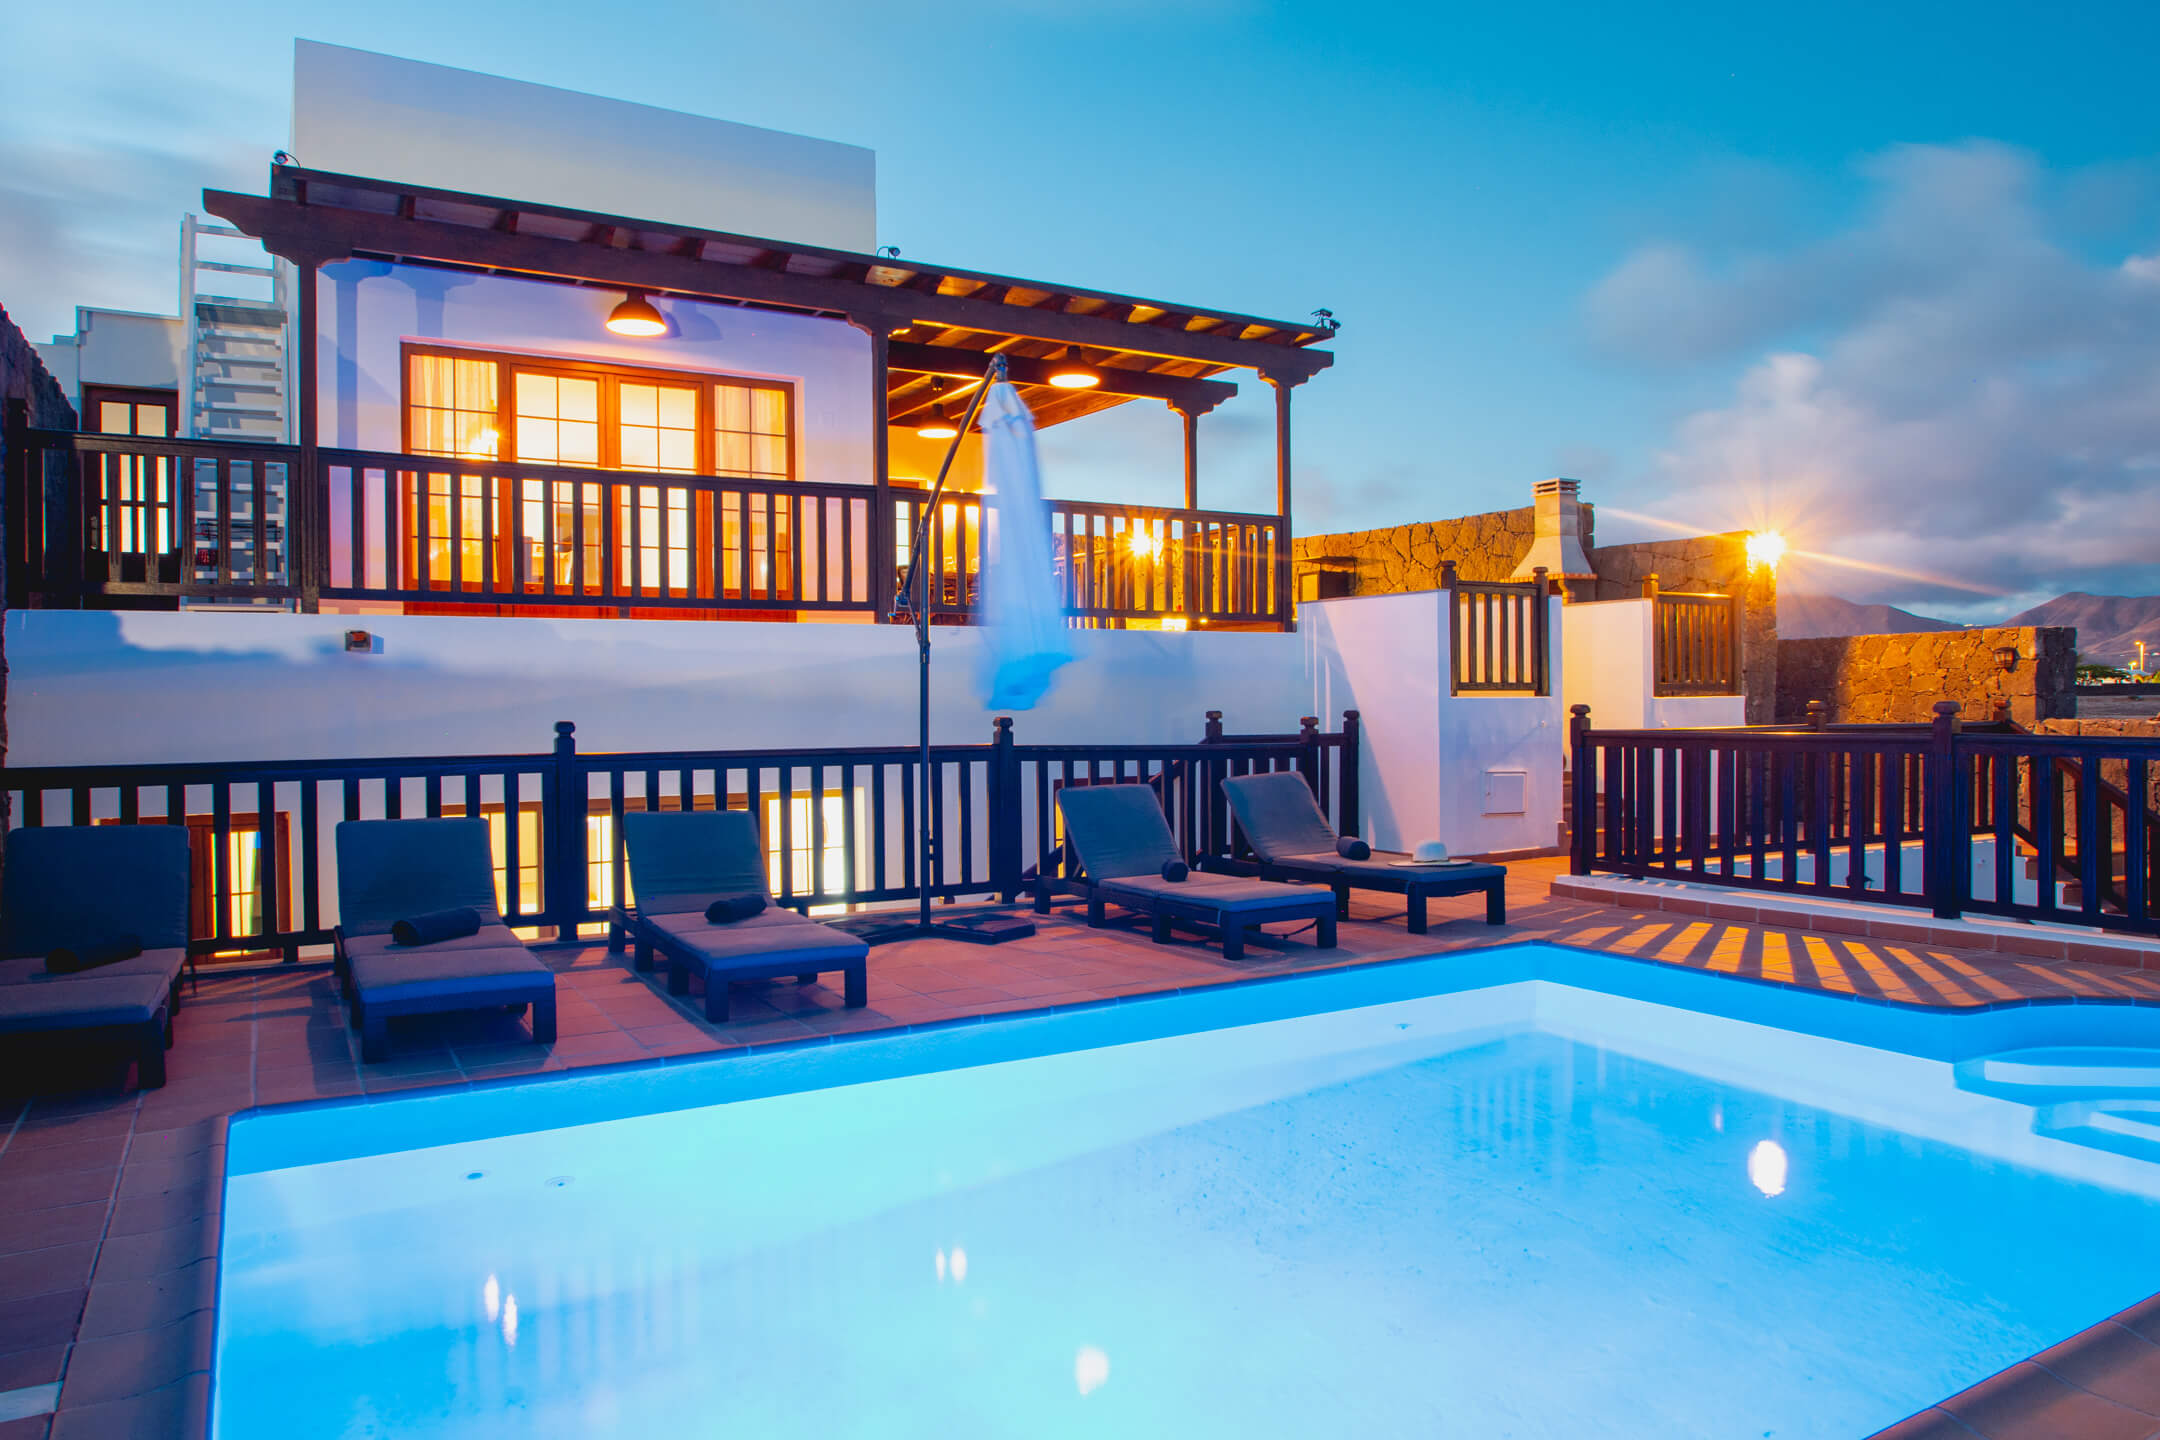 Lanzarote Accommodation Villa Vista Reina - 6 Bedrooms